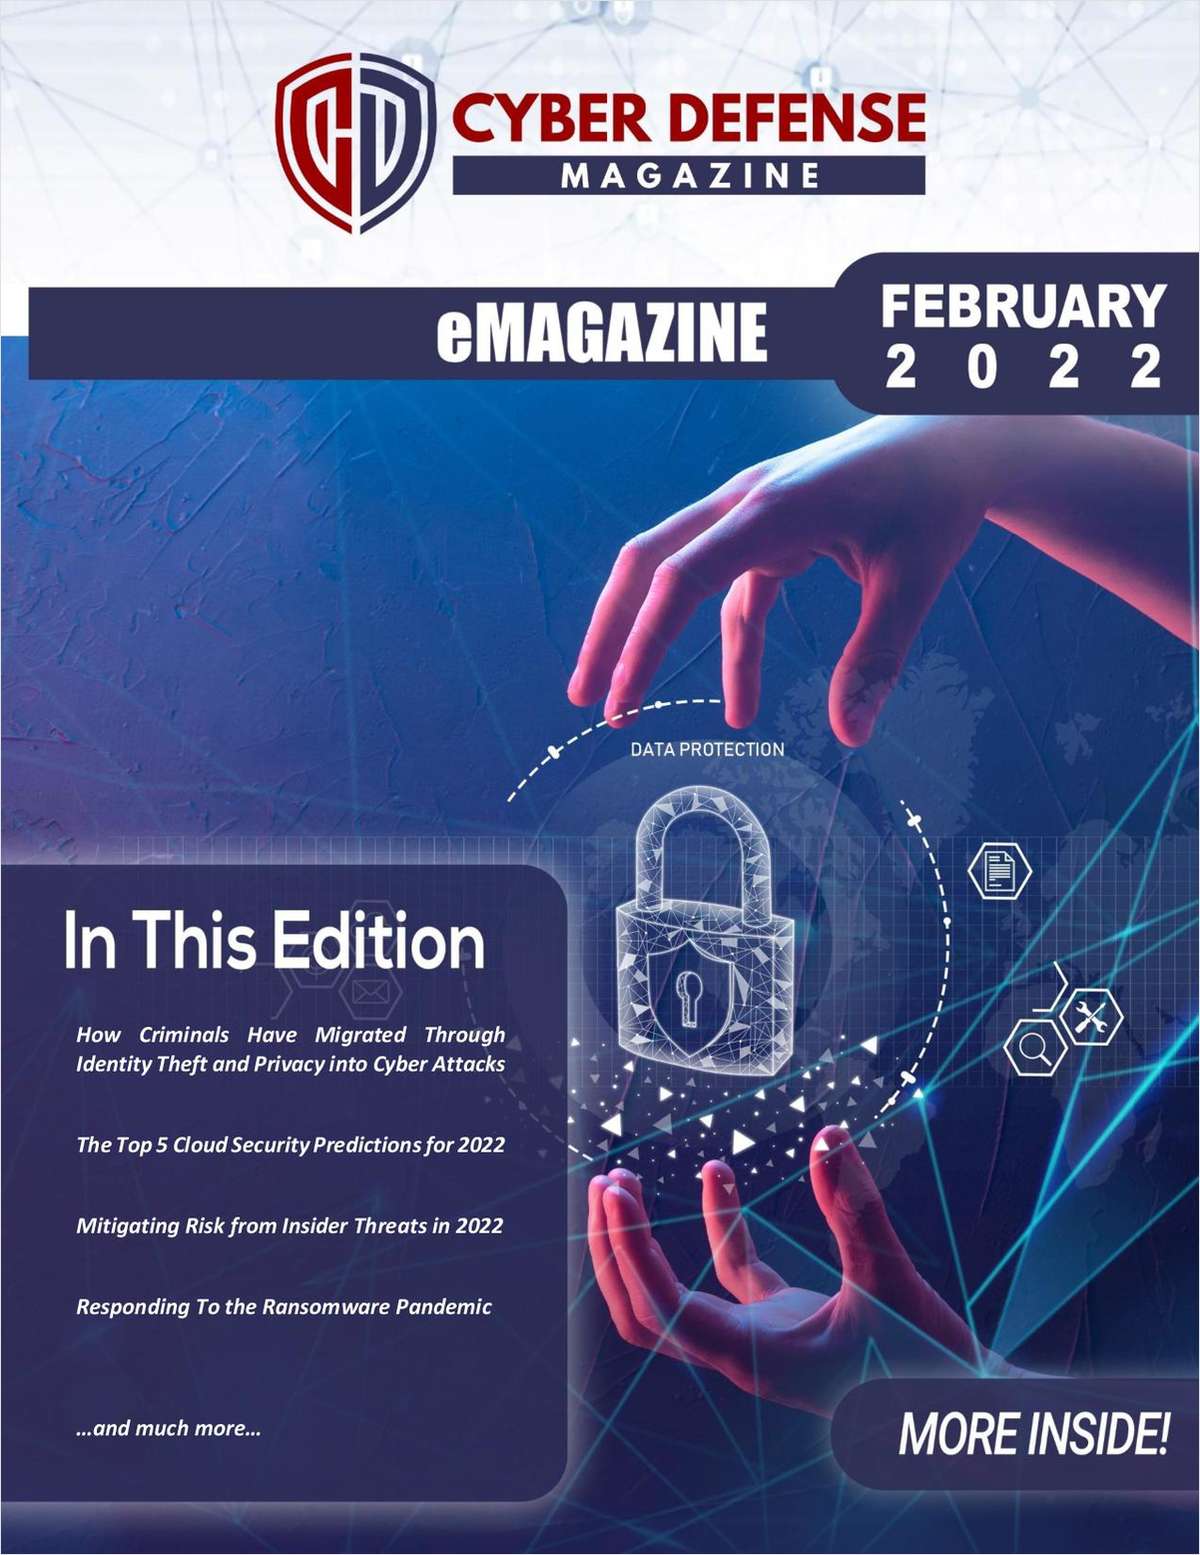 Cyber Defense Magazine February 2022 Edition